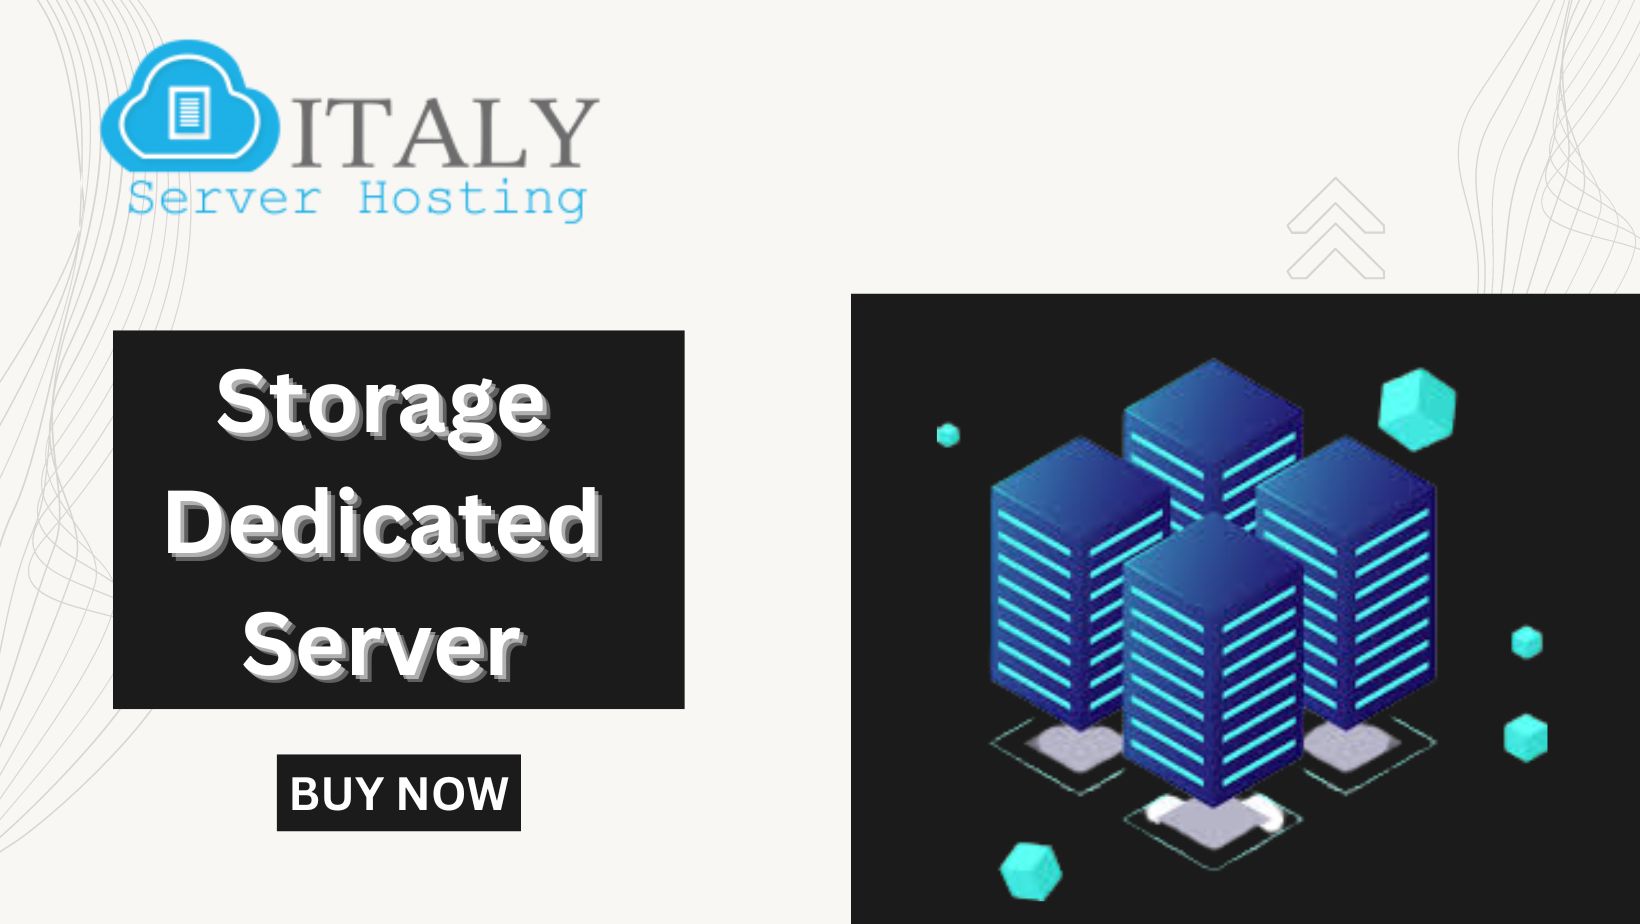 Storage Dedicated Server